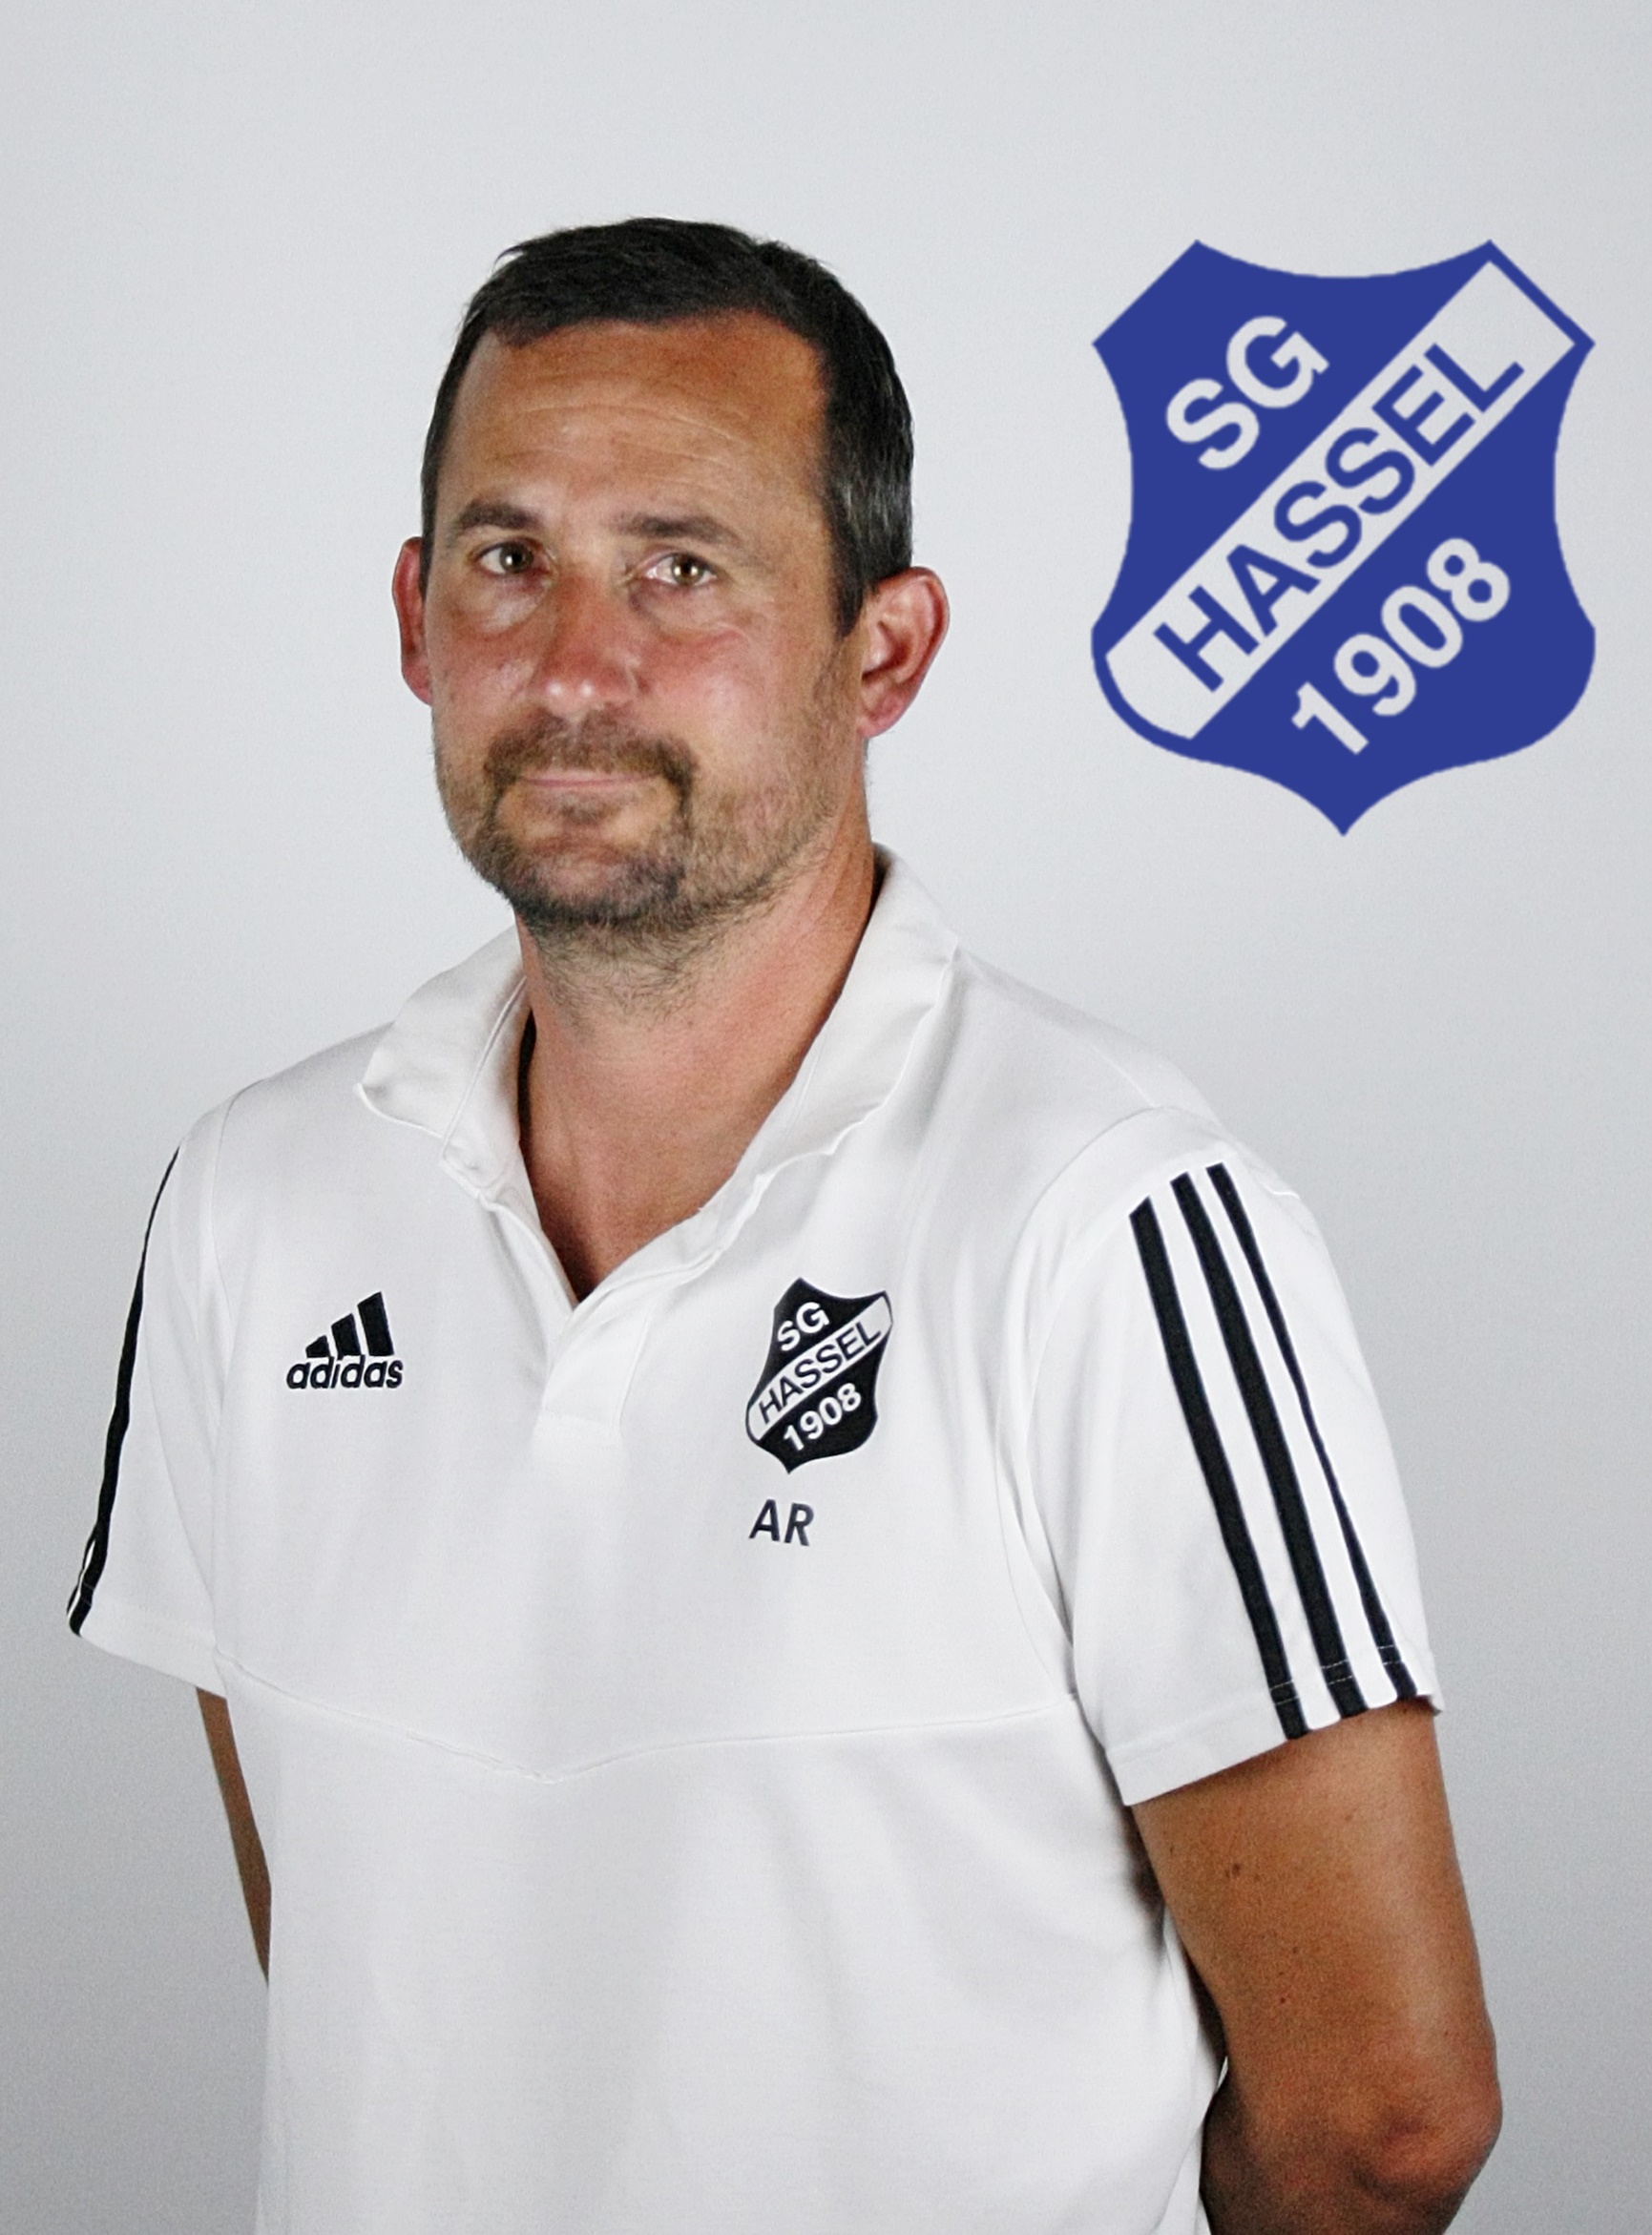 Co-Trainer André Rörsch